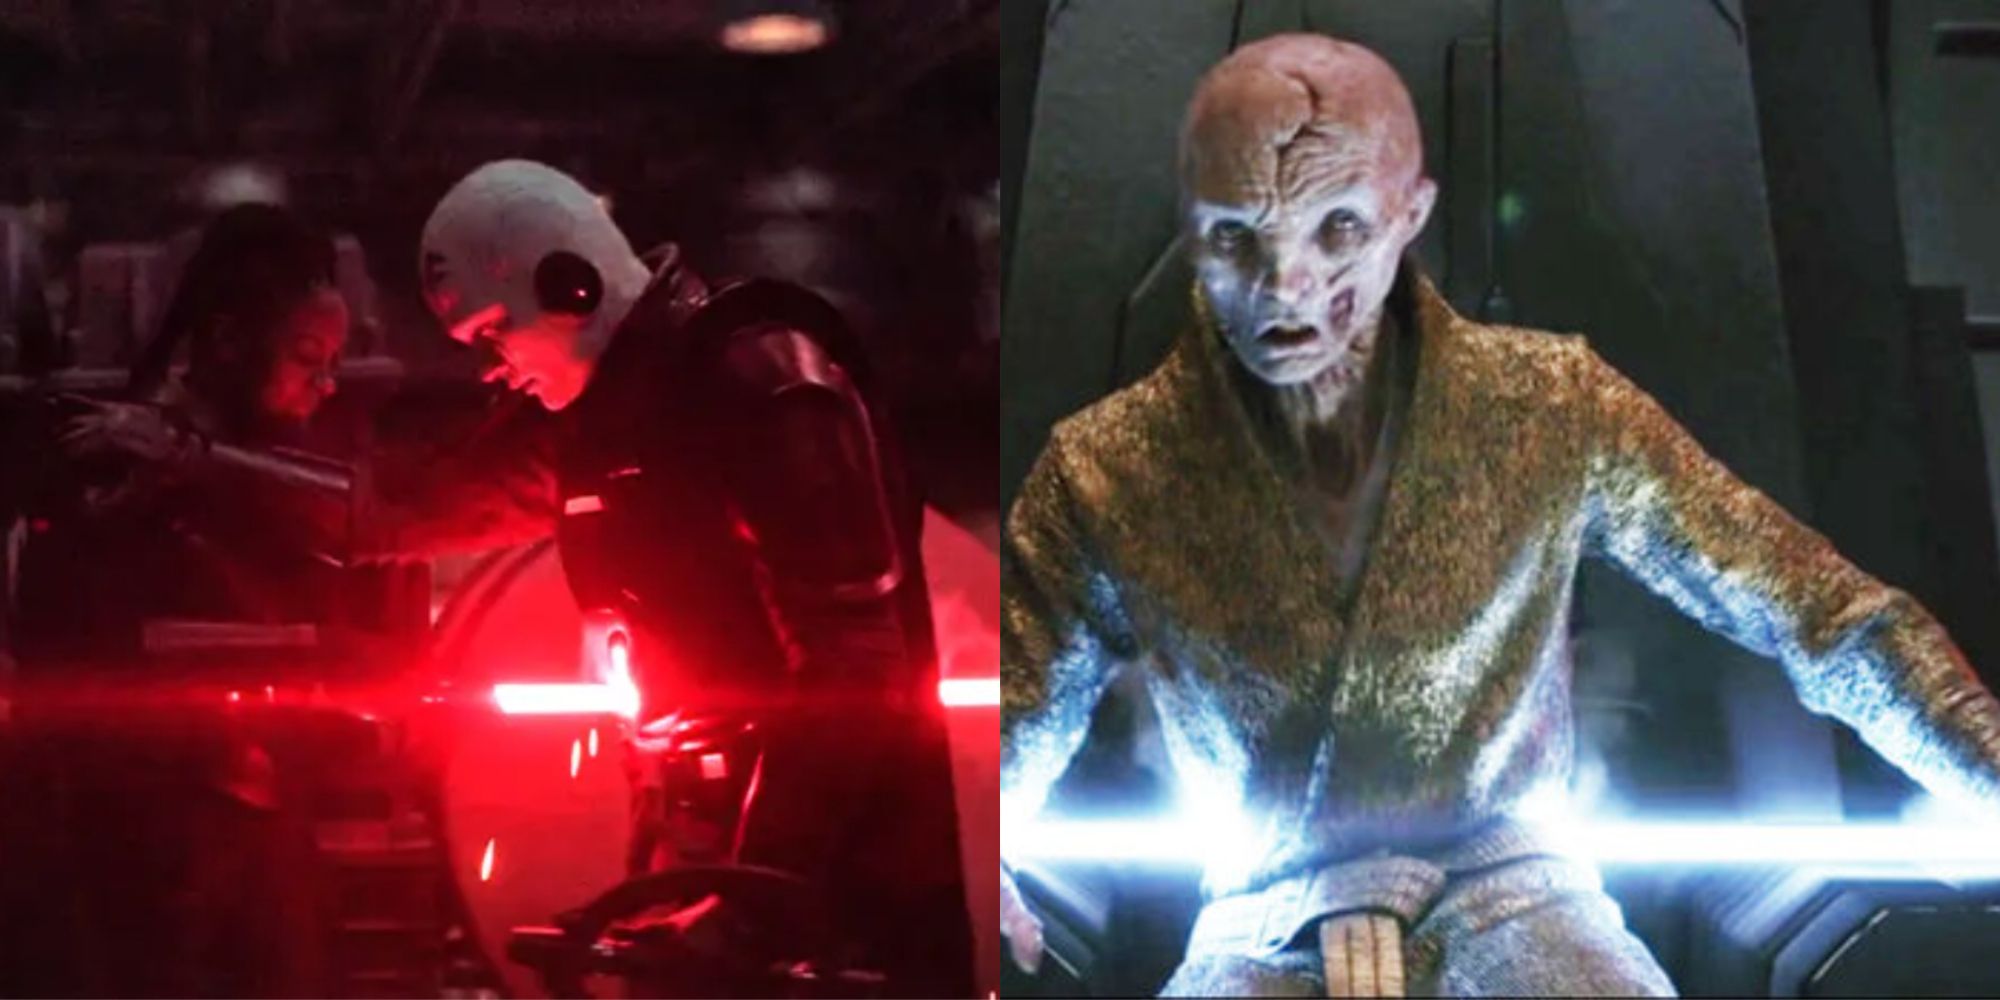 Split image of Grand Inquisitor's death in Obi-Wan Kenobi and Supreme Leader Snoke's death in Star Wars: The Last Jedi